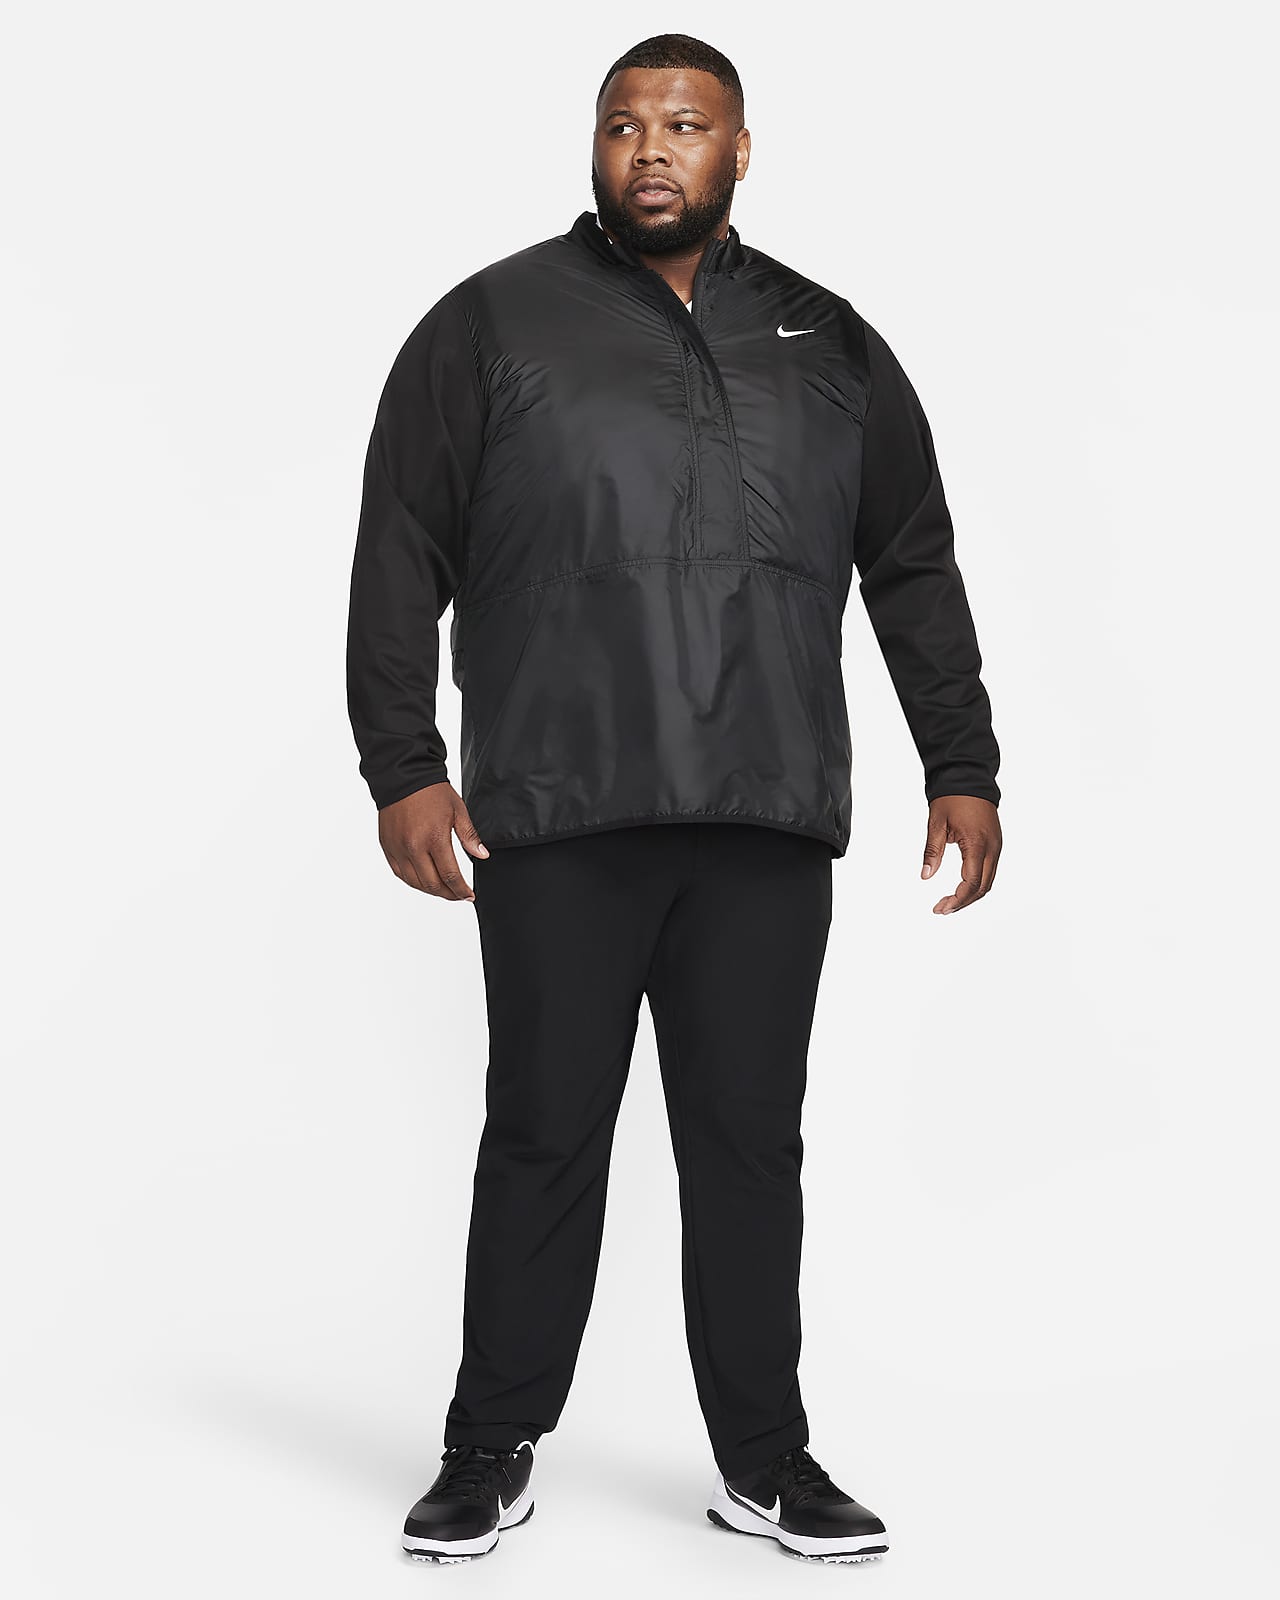 Nike Dri Fit Jacket And Pants Blue Large Mens | eBay